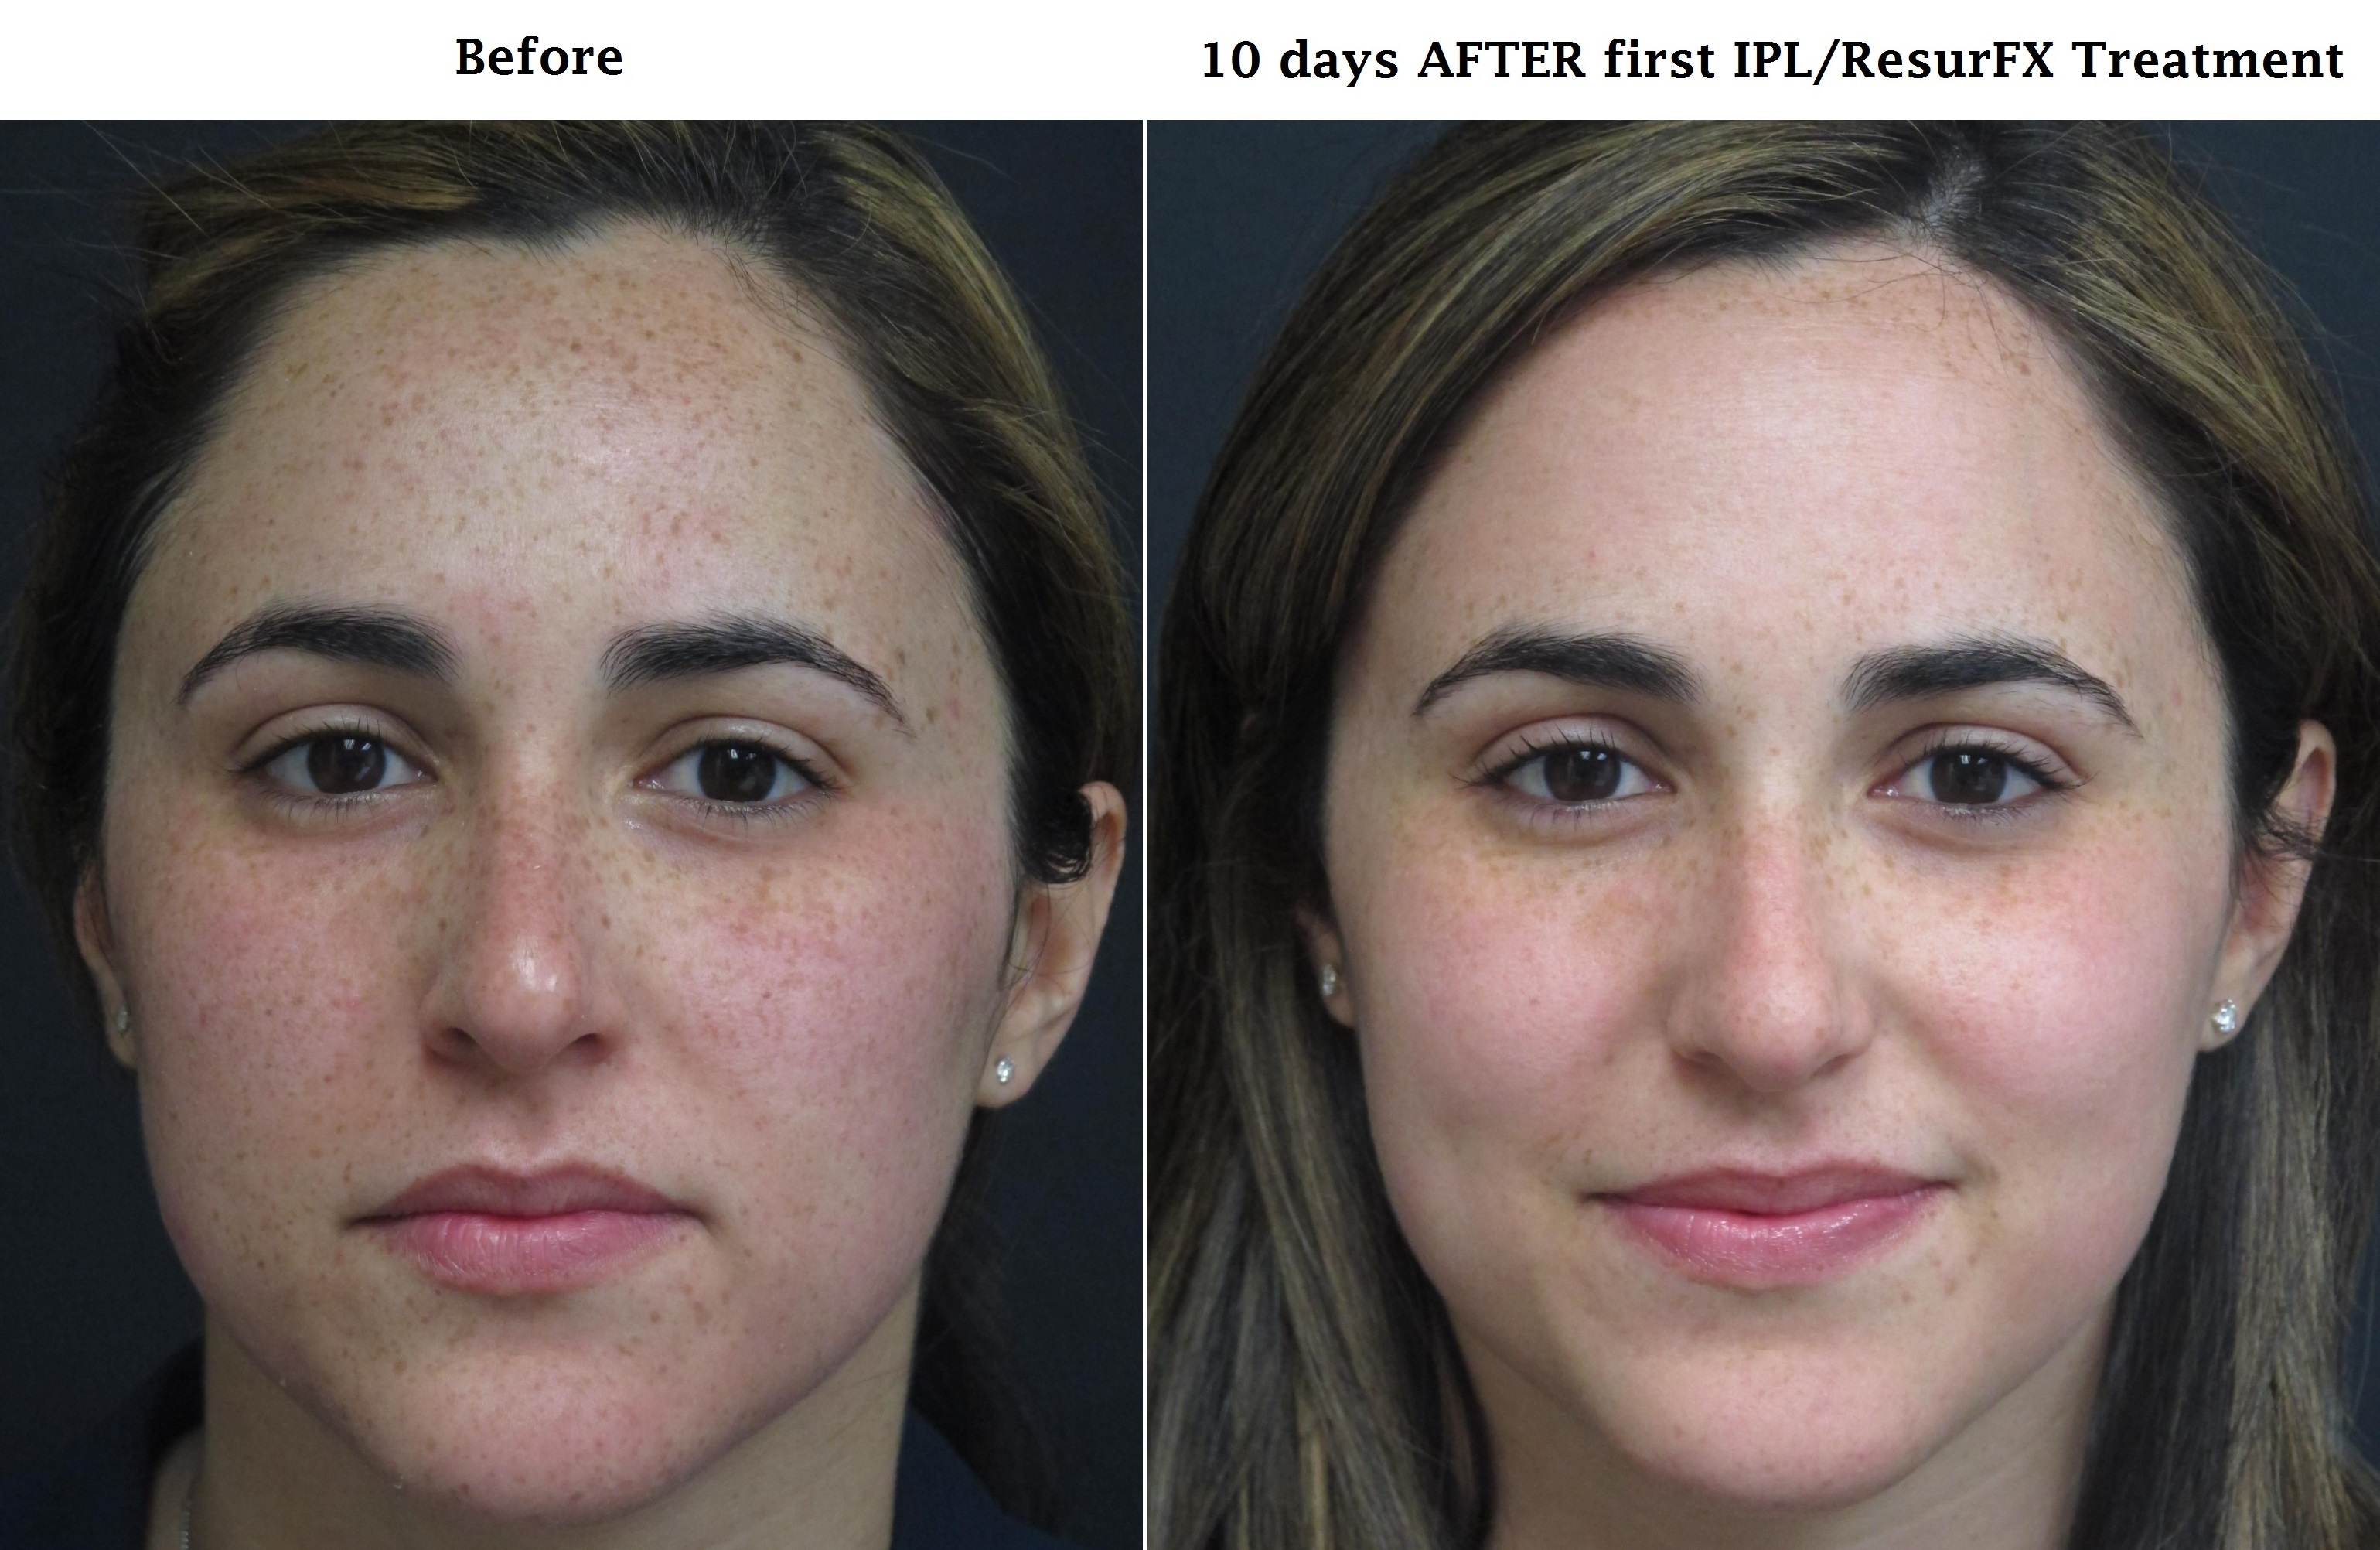 Diminish facial spots permanently